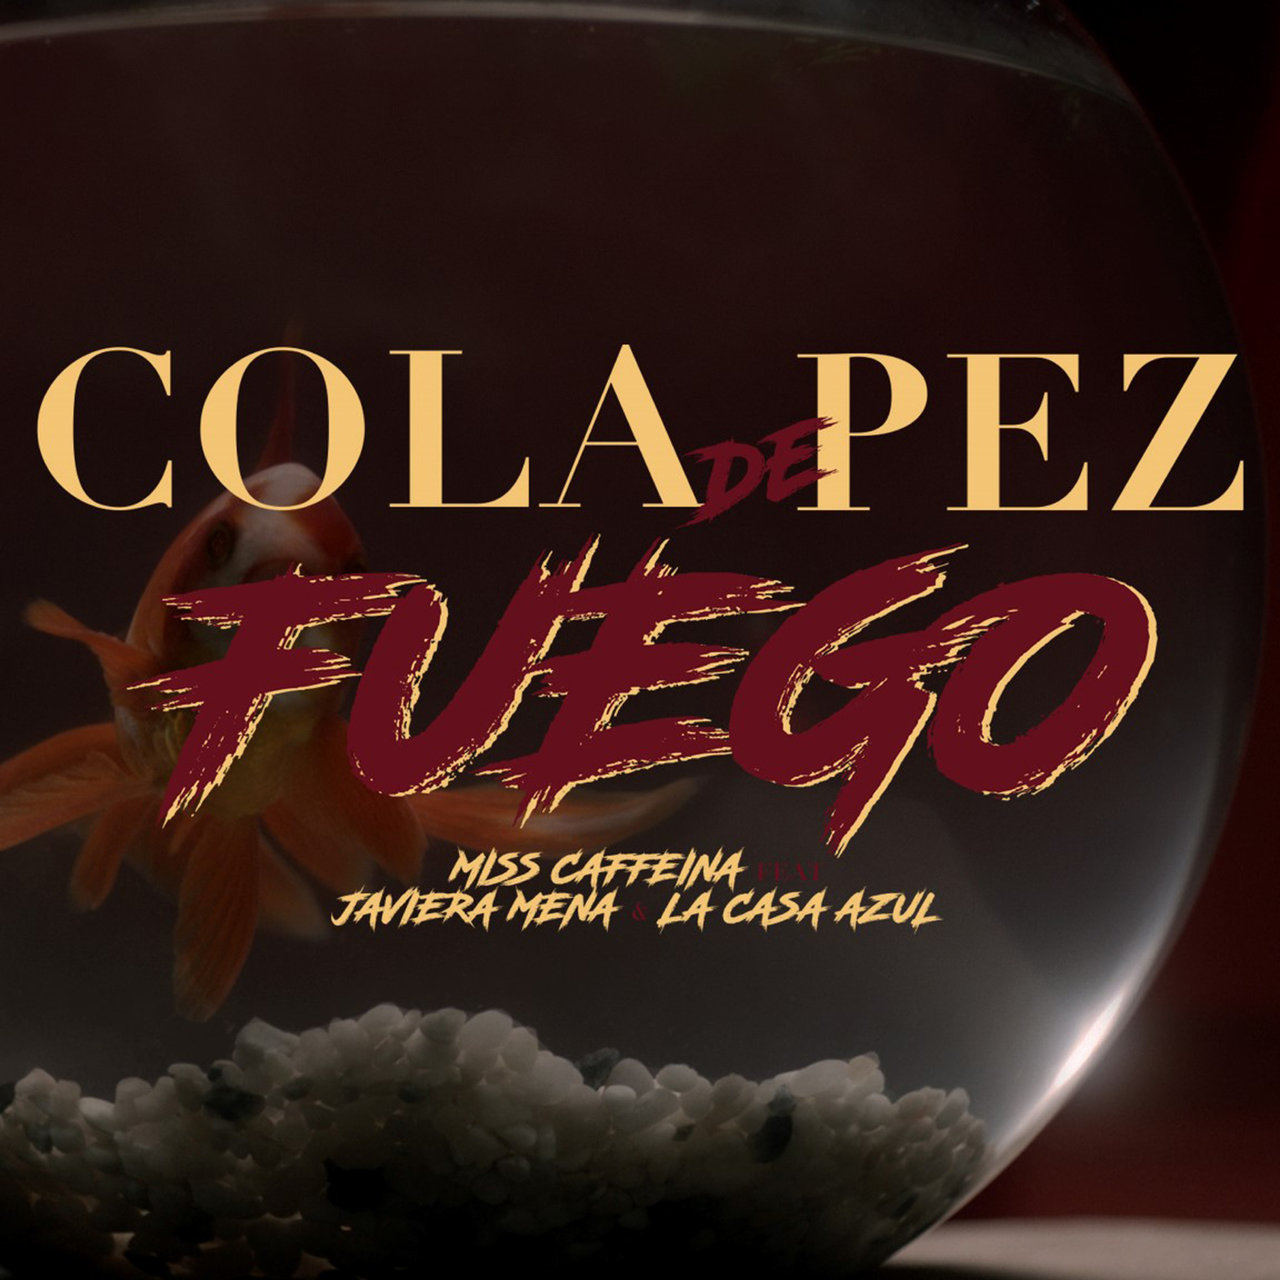 Miss Caffeina featuring Javiera Mena & La Casa Azul — Cola de pez (Fuego) cover artwork